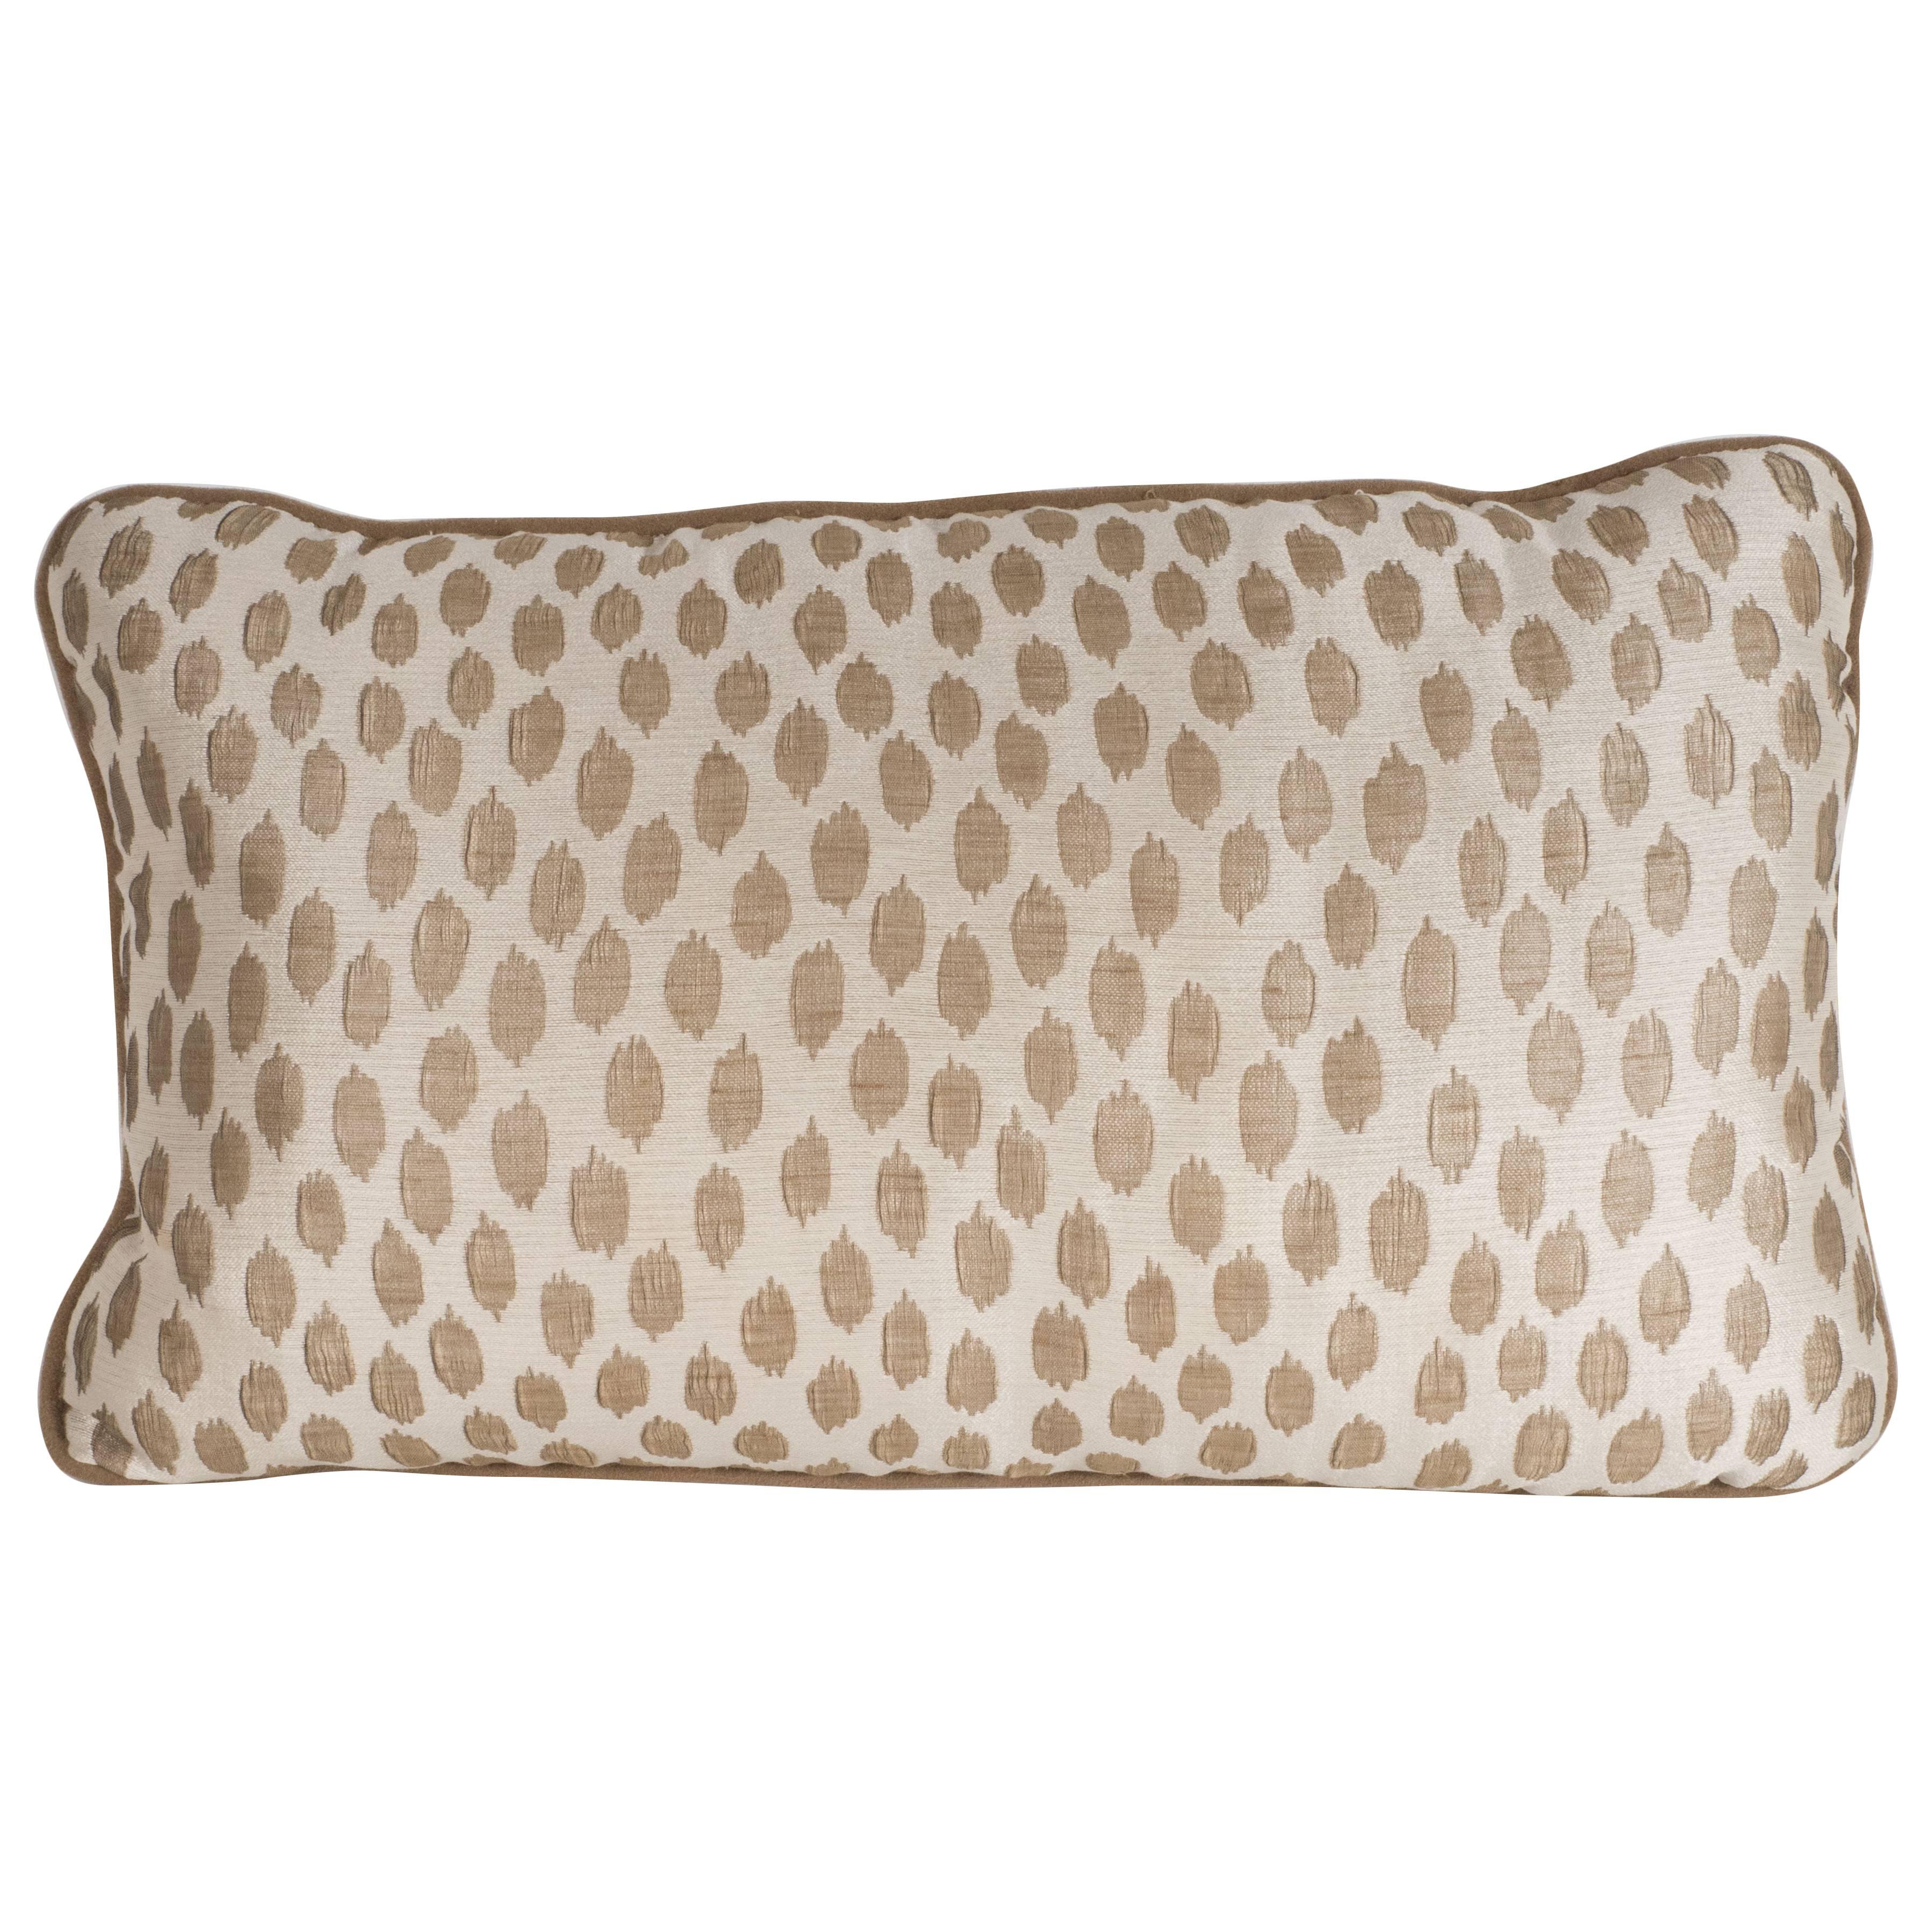 Modernist Rectangular Pillow with Organic Patterned Ecru & Pale Gold Fabric